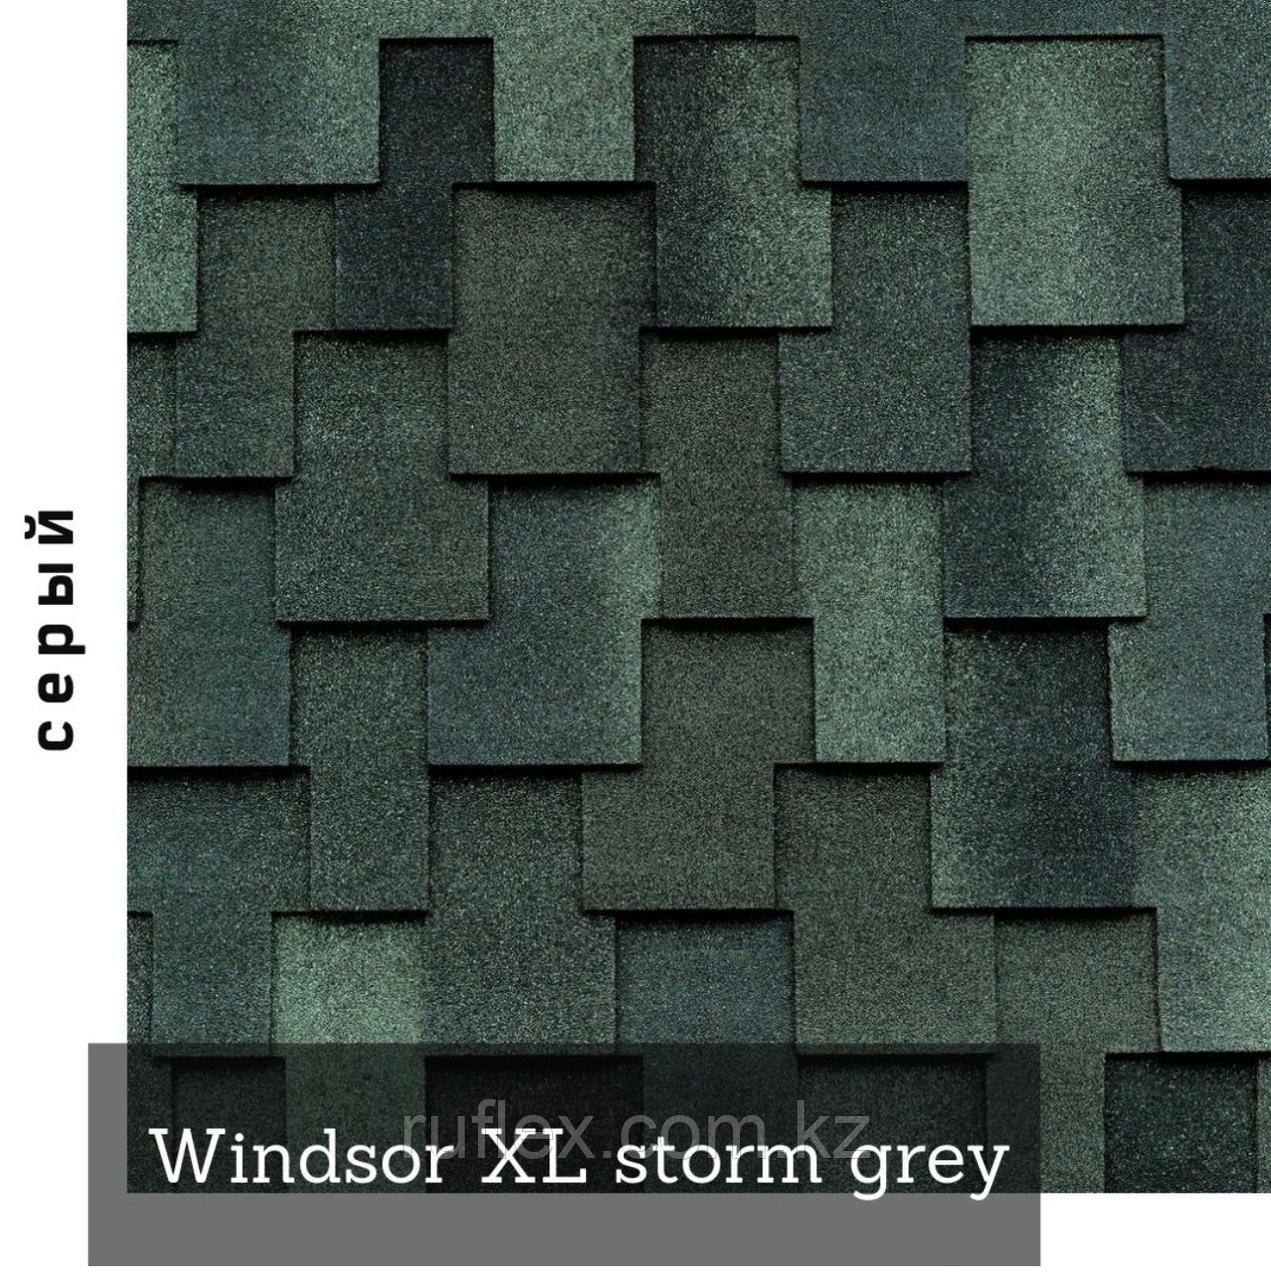 Гибкая черепица Malarkey Windsor XL Storm grey (Made in USA)